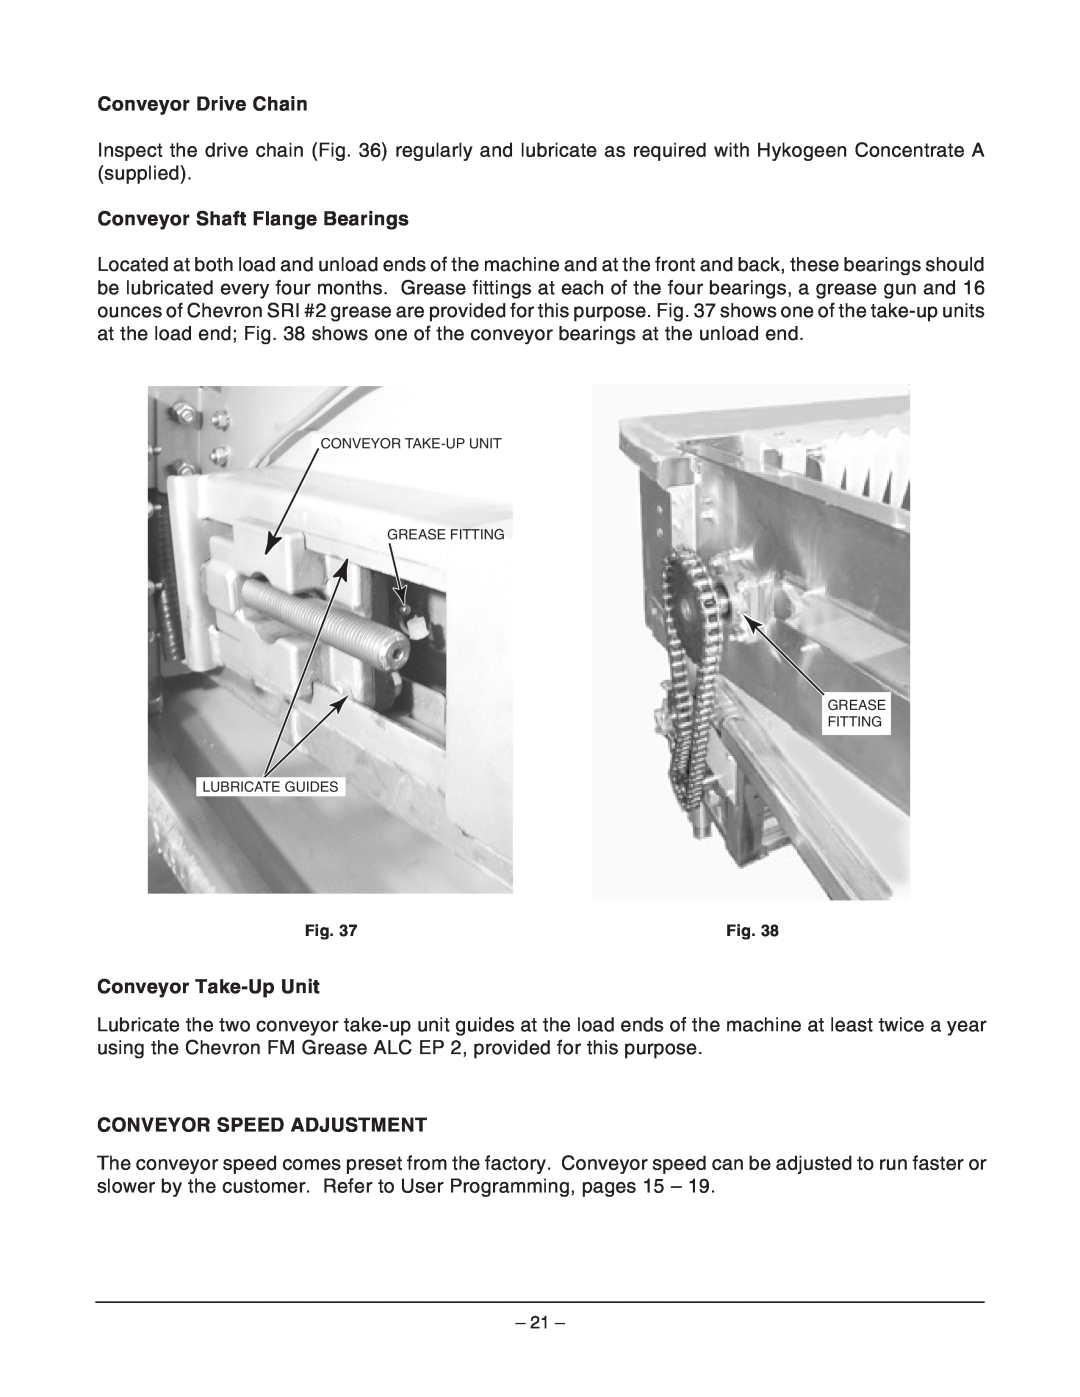 Hobart FT900S manual Conveyor Drive Chain, Conveyor Shaft Flange Bearings, Conveyor Take-UpUnit, Conveyor Speed Adjustment 